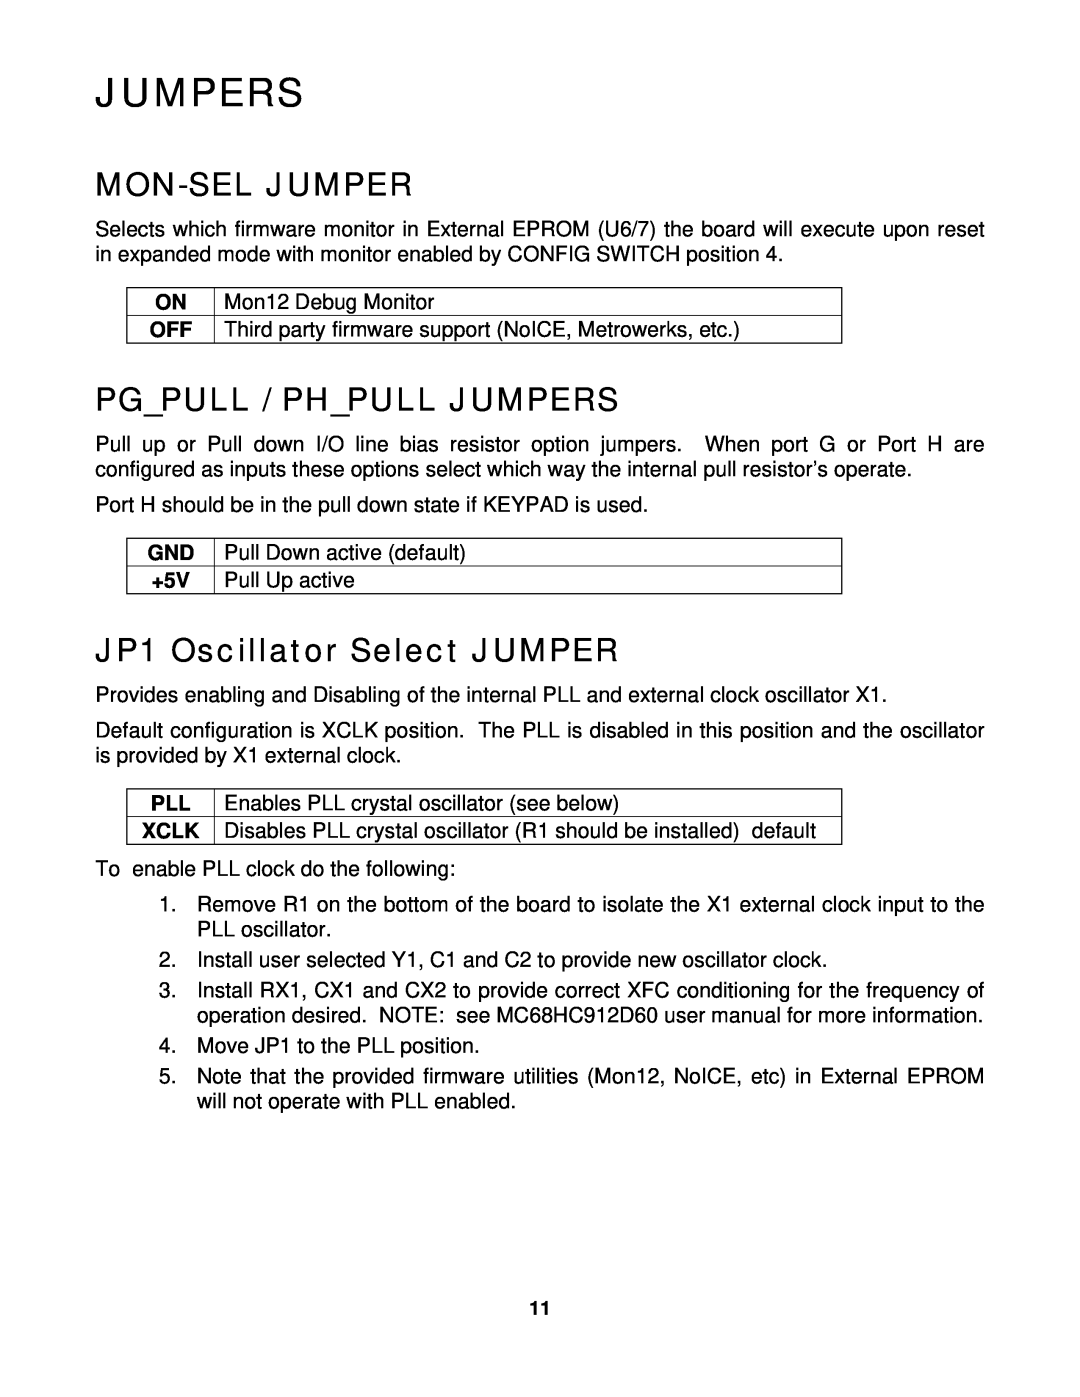 Motorola CME-12D60 manual Mon-Sel Jumper, Pgpull / Phpull Jumpers, JP1 Oscillator Select JUMPER, Mon12 Debug Monitor 